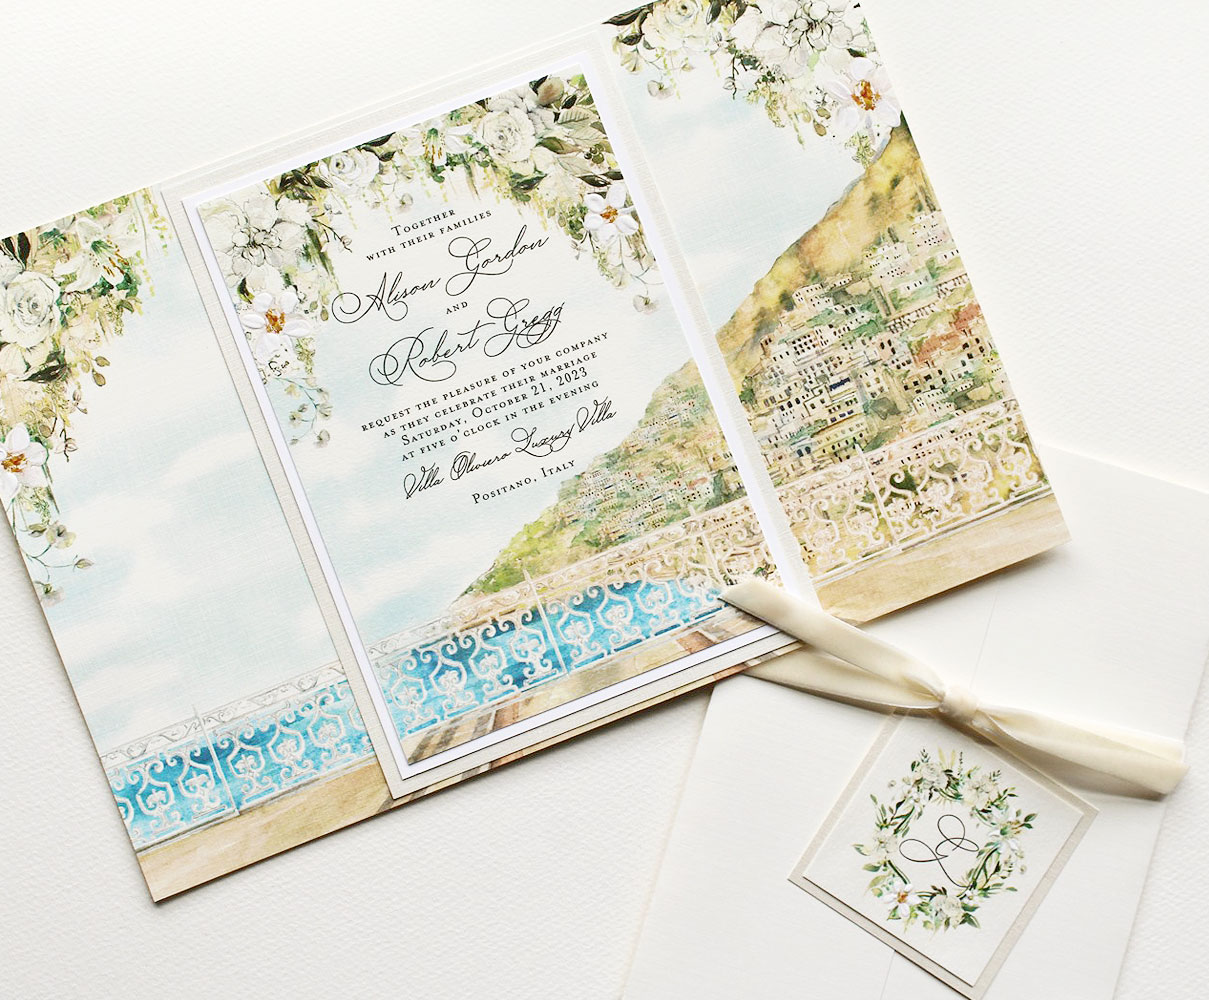 villa-oliviero-wedding-invitations